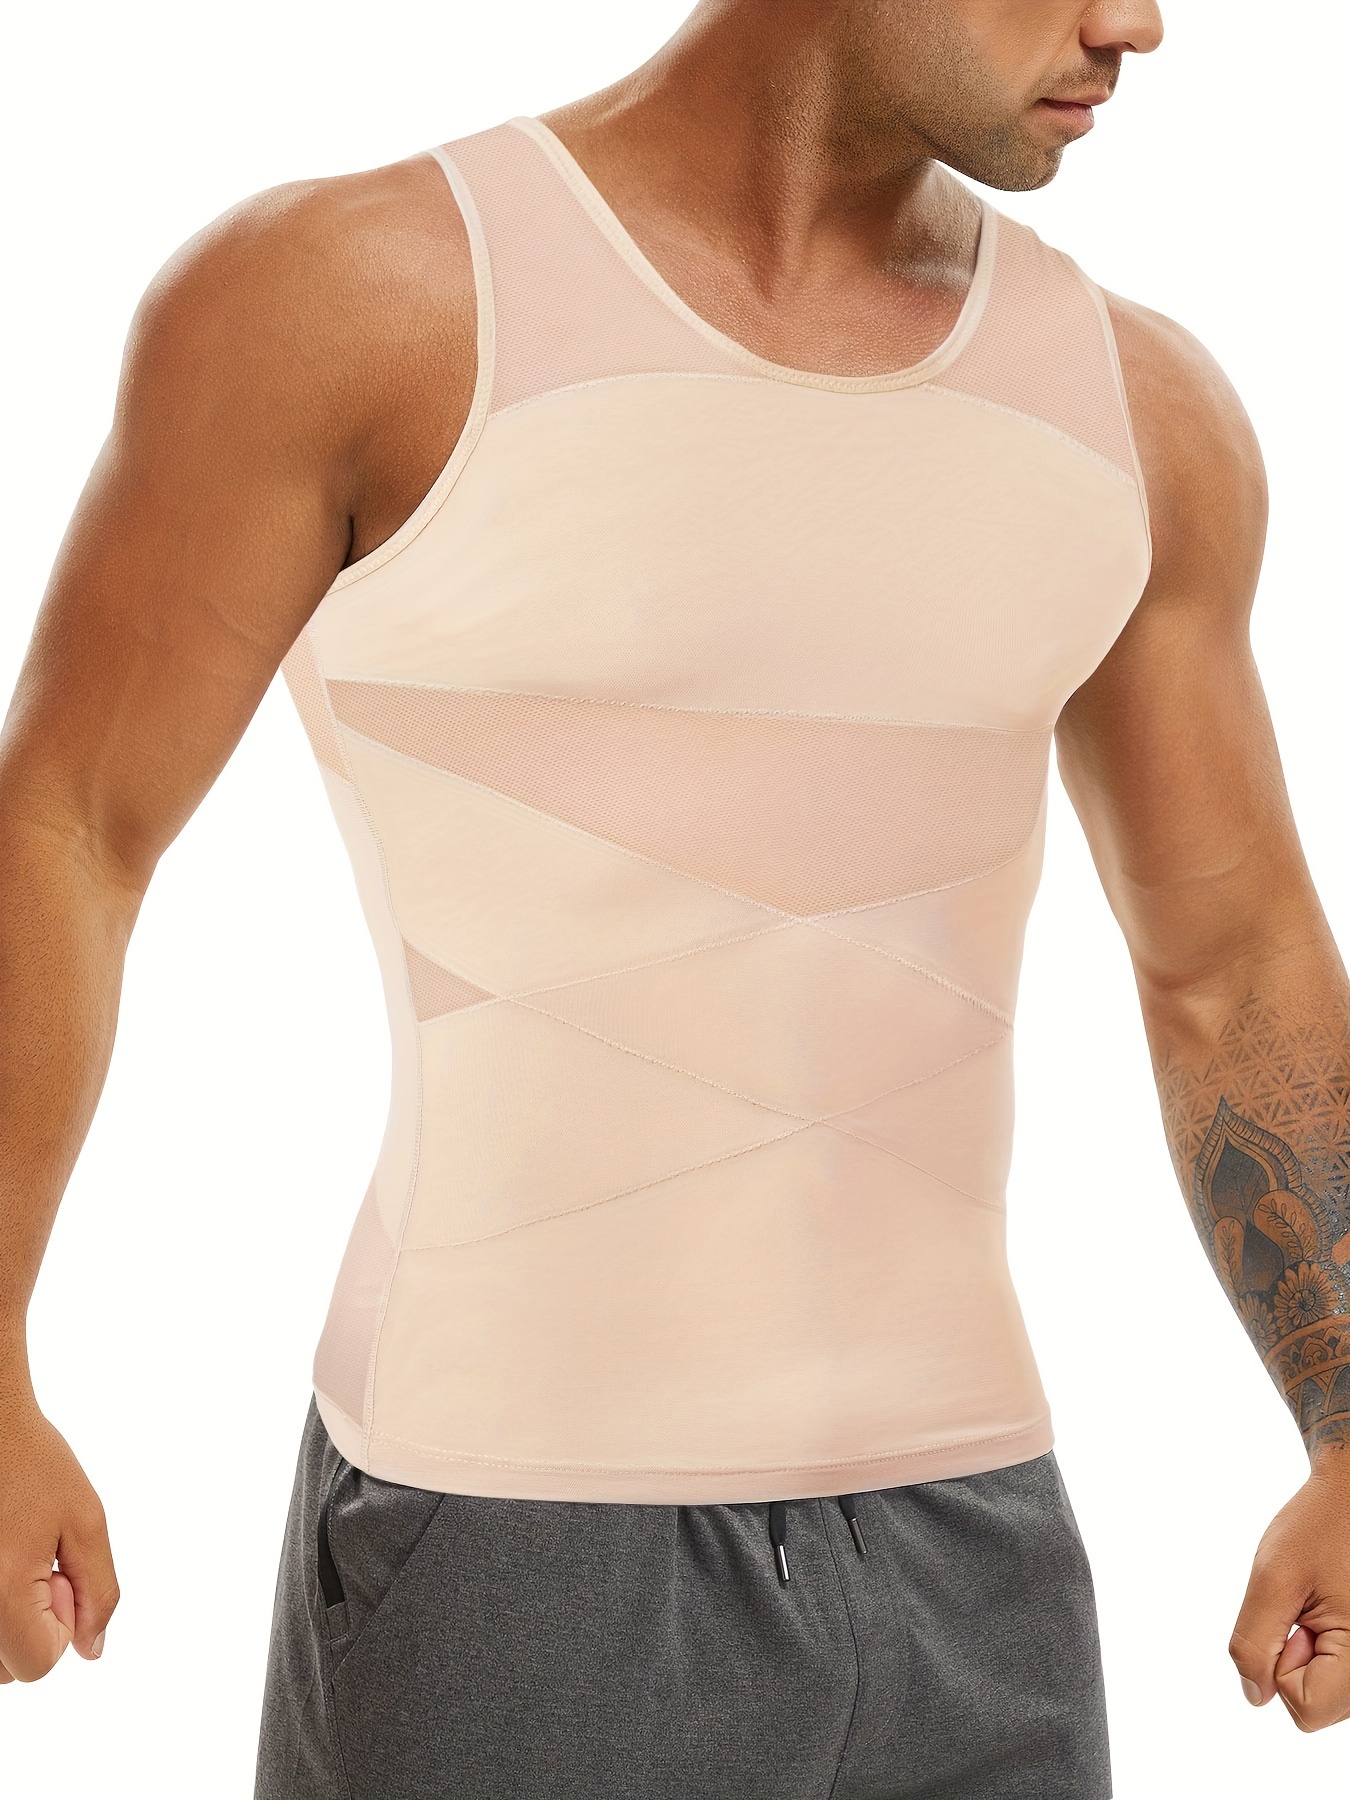 Men's Compression Shirts, Mesh Body Shaper Vest, Slimming Breathable Tank  Top Tummy Control Vest